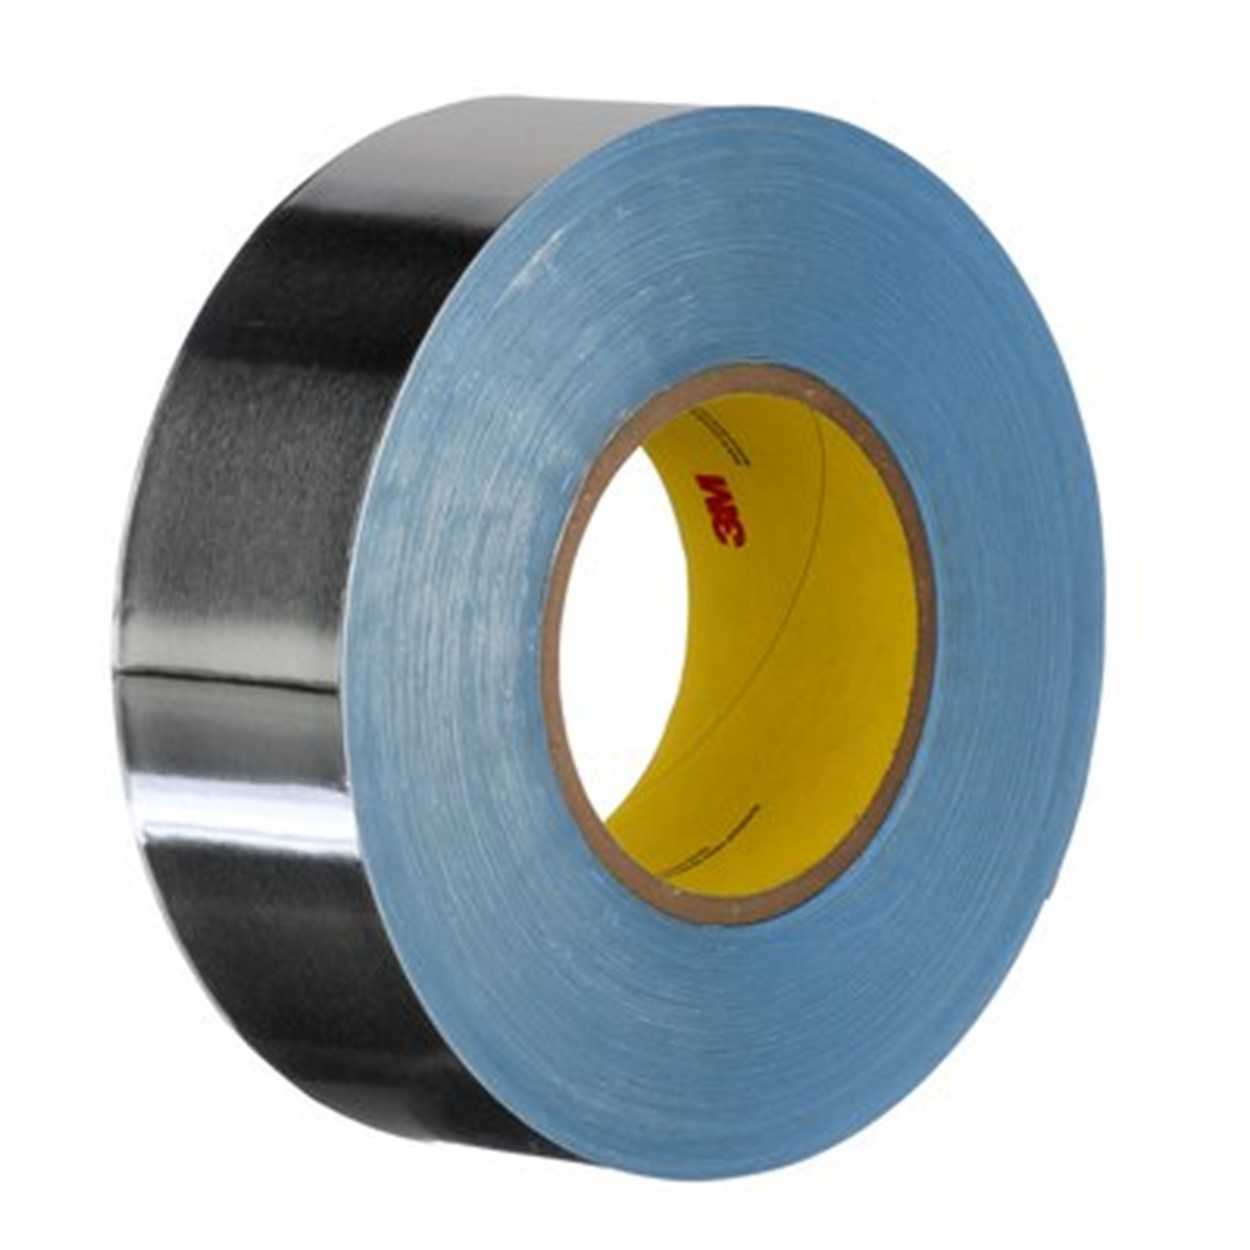 434, ScotchdampT Vibration Damping Tape, 3M, adhesive tape datasheet